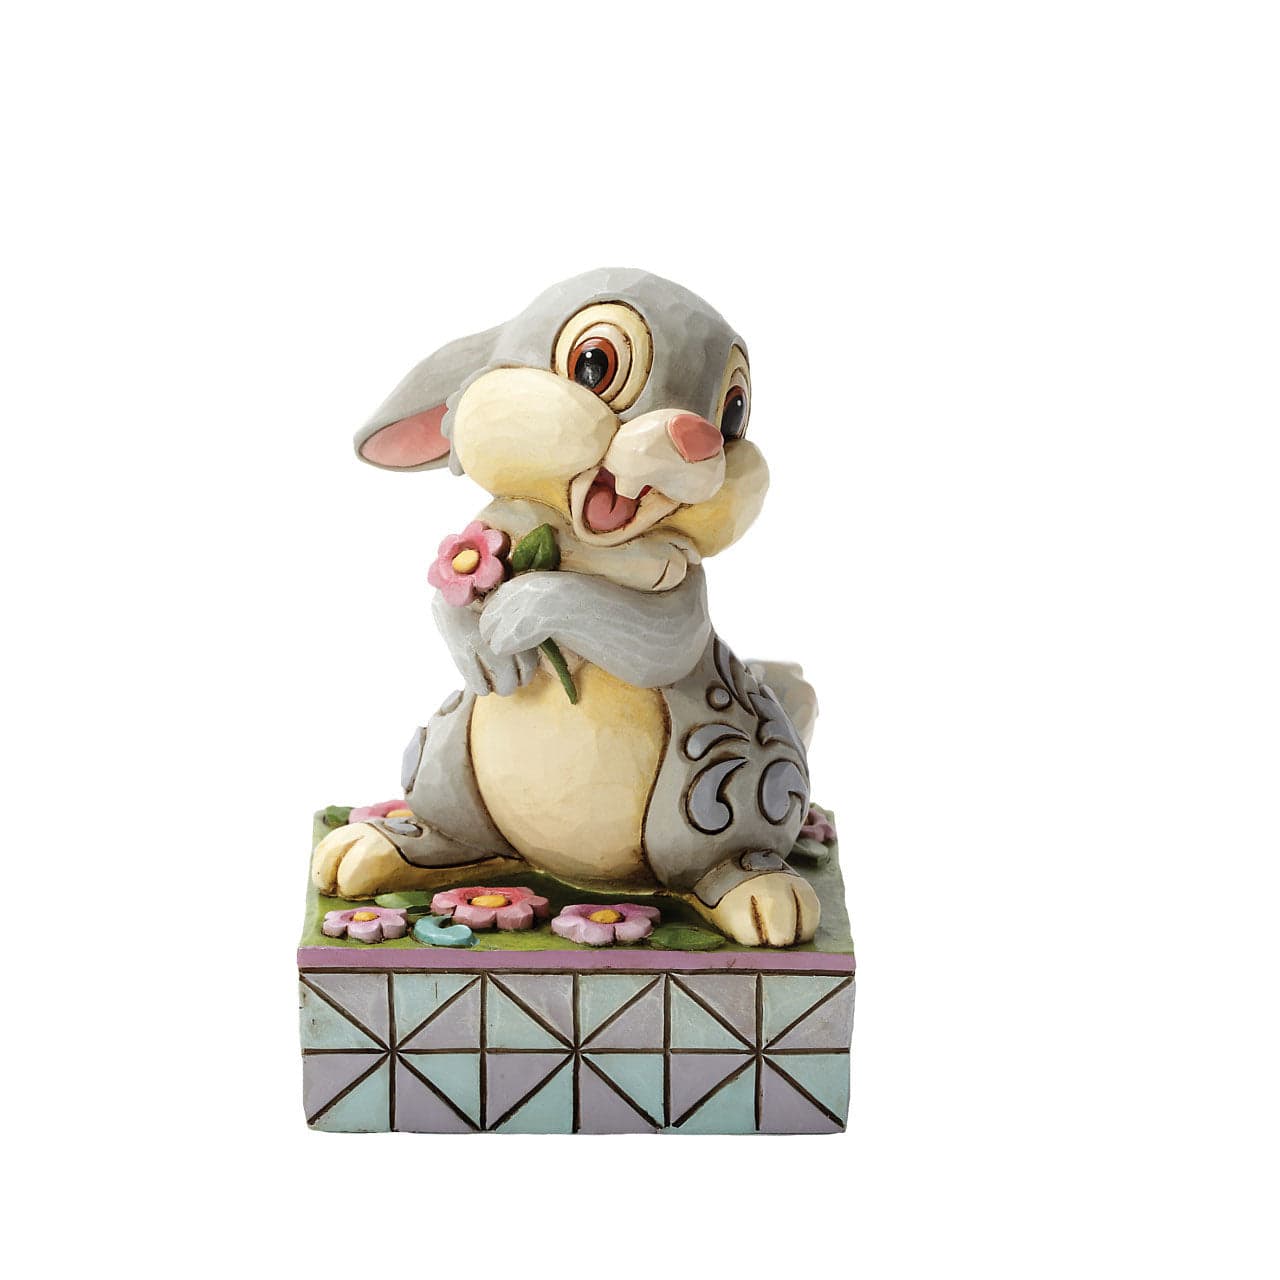 Enesco Disney Ornament Disney Traditions Figurine - Thumper - Spring Has Sprung